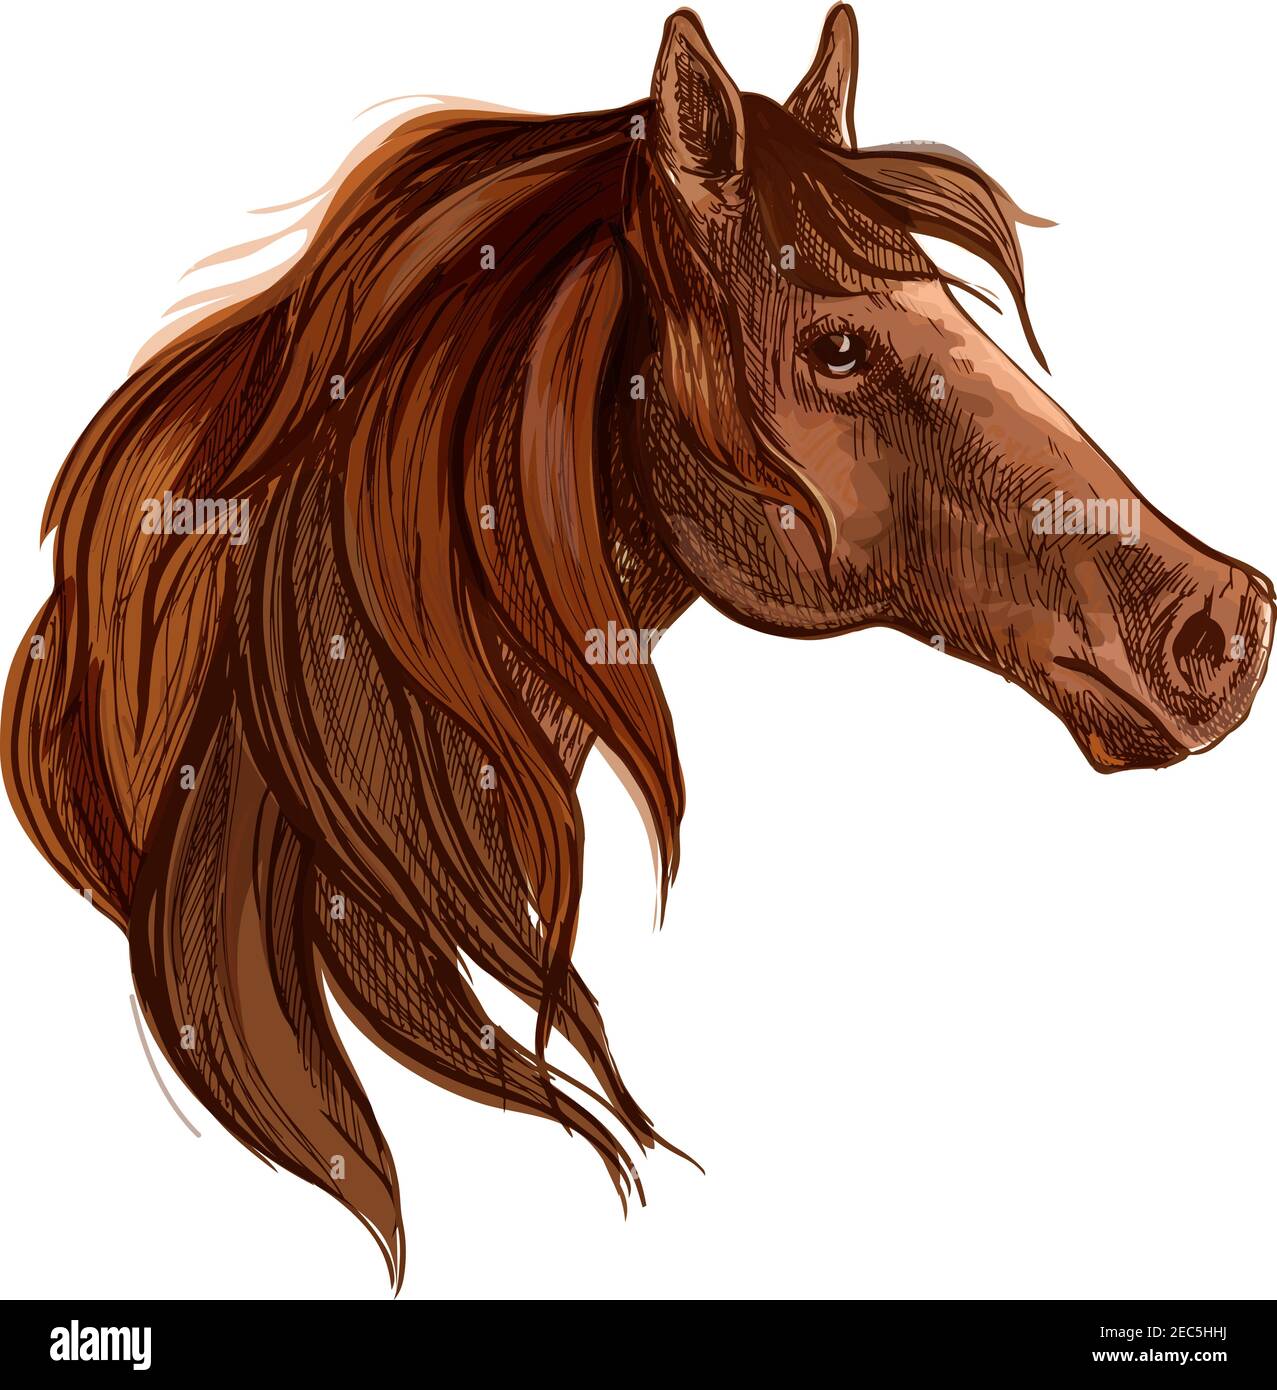 Bay Horse mit langen Mähne Vektor-Porträt. Brauner Hengst mustang Kopf mit schauenden Blick Stock Vektor